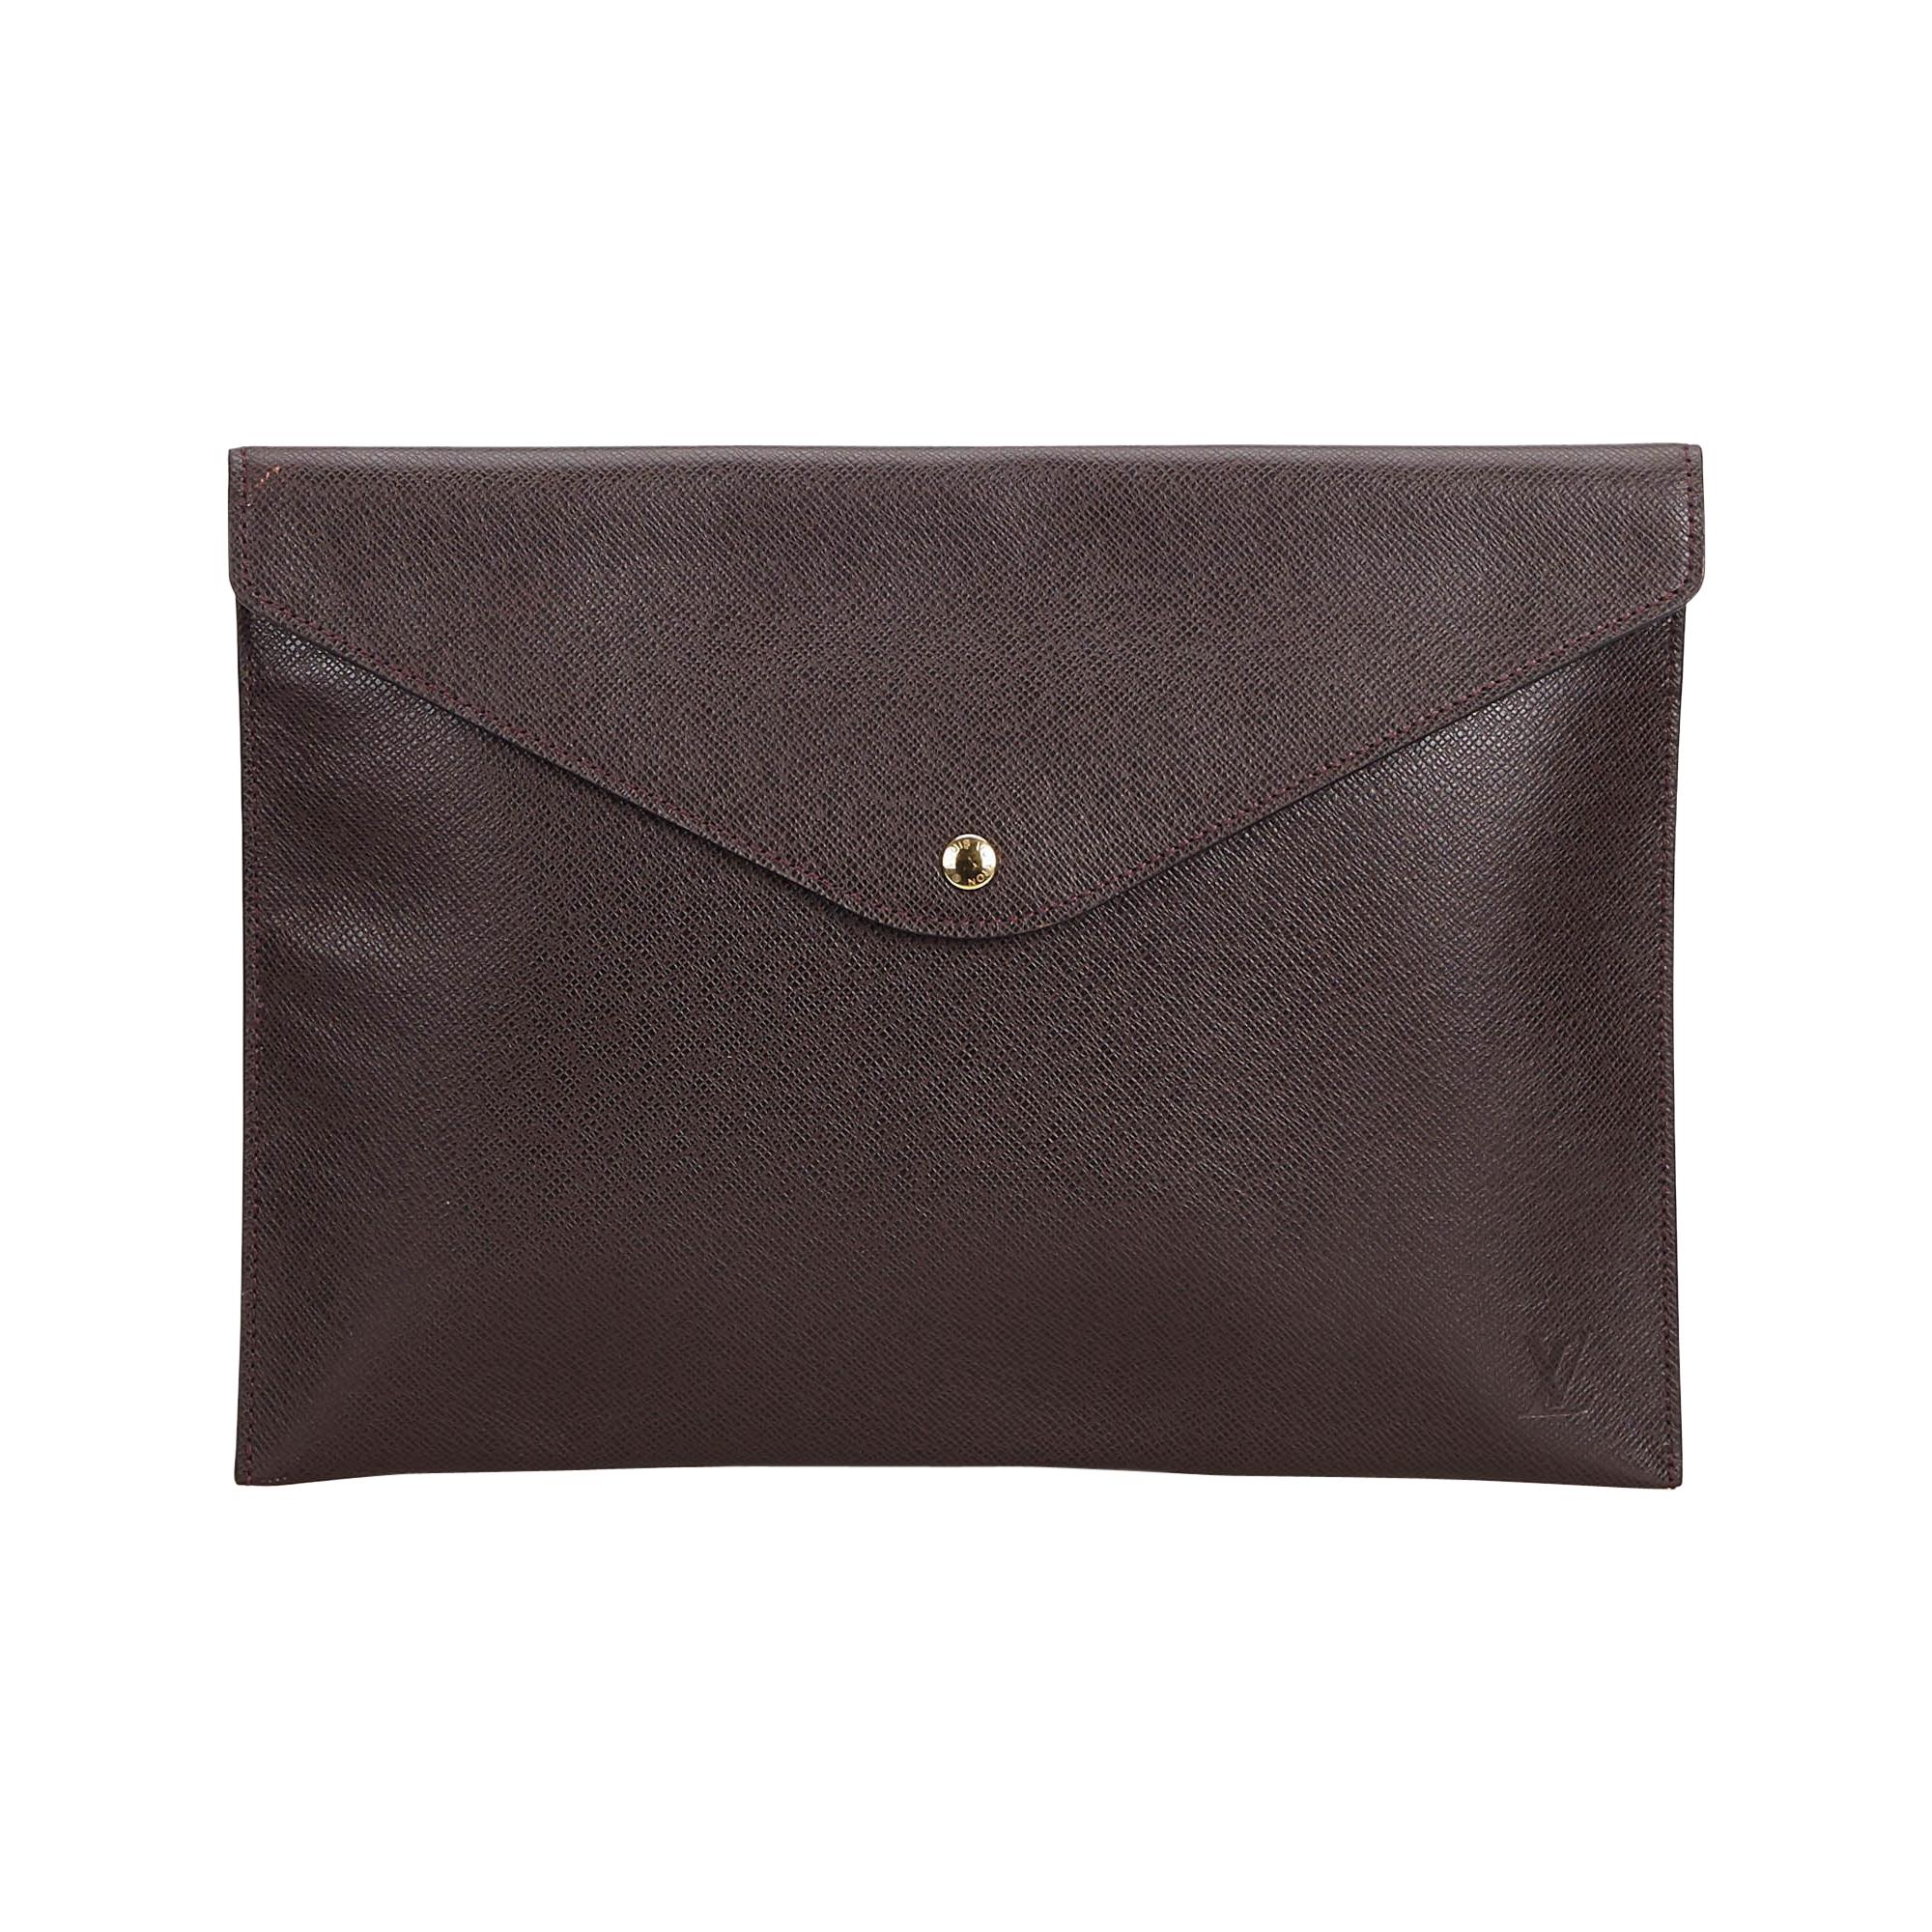 Vintage Authentic Louis Vuitton Brown Document Case Clutch Bag FRANCE SMALL  For Sale